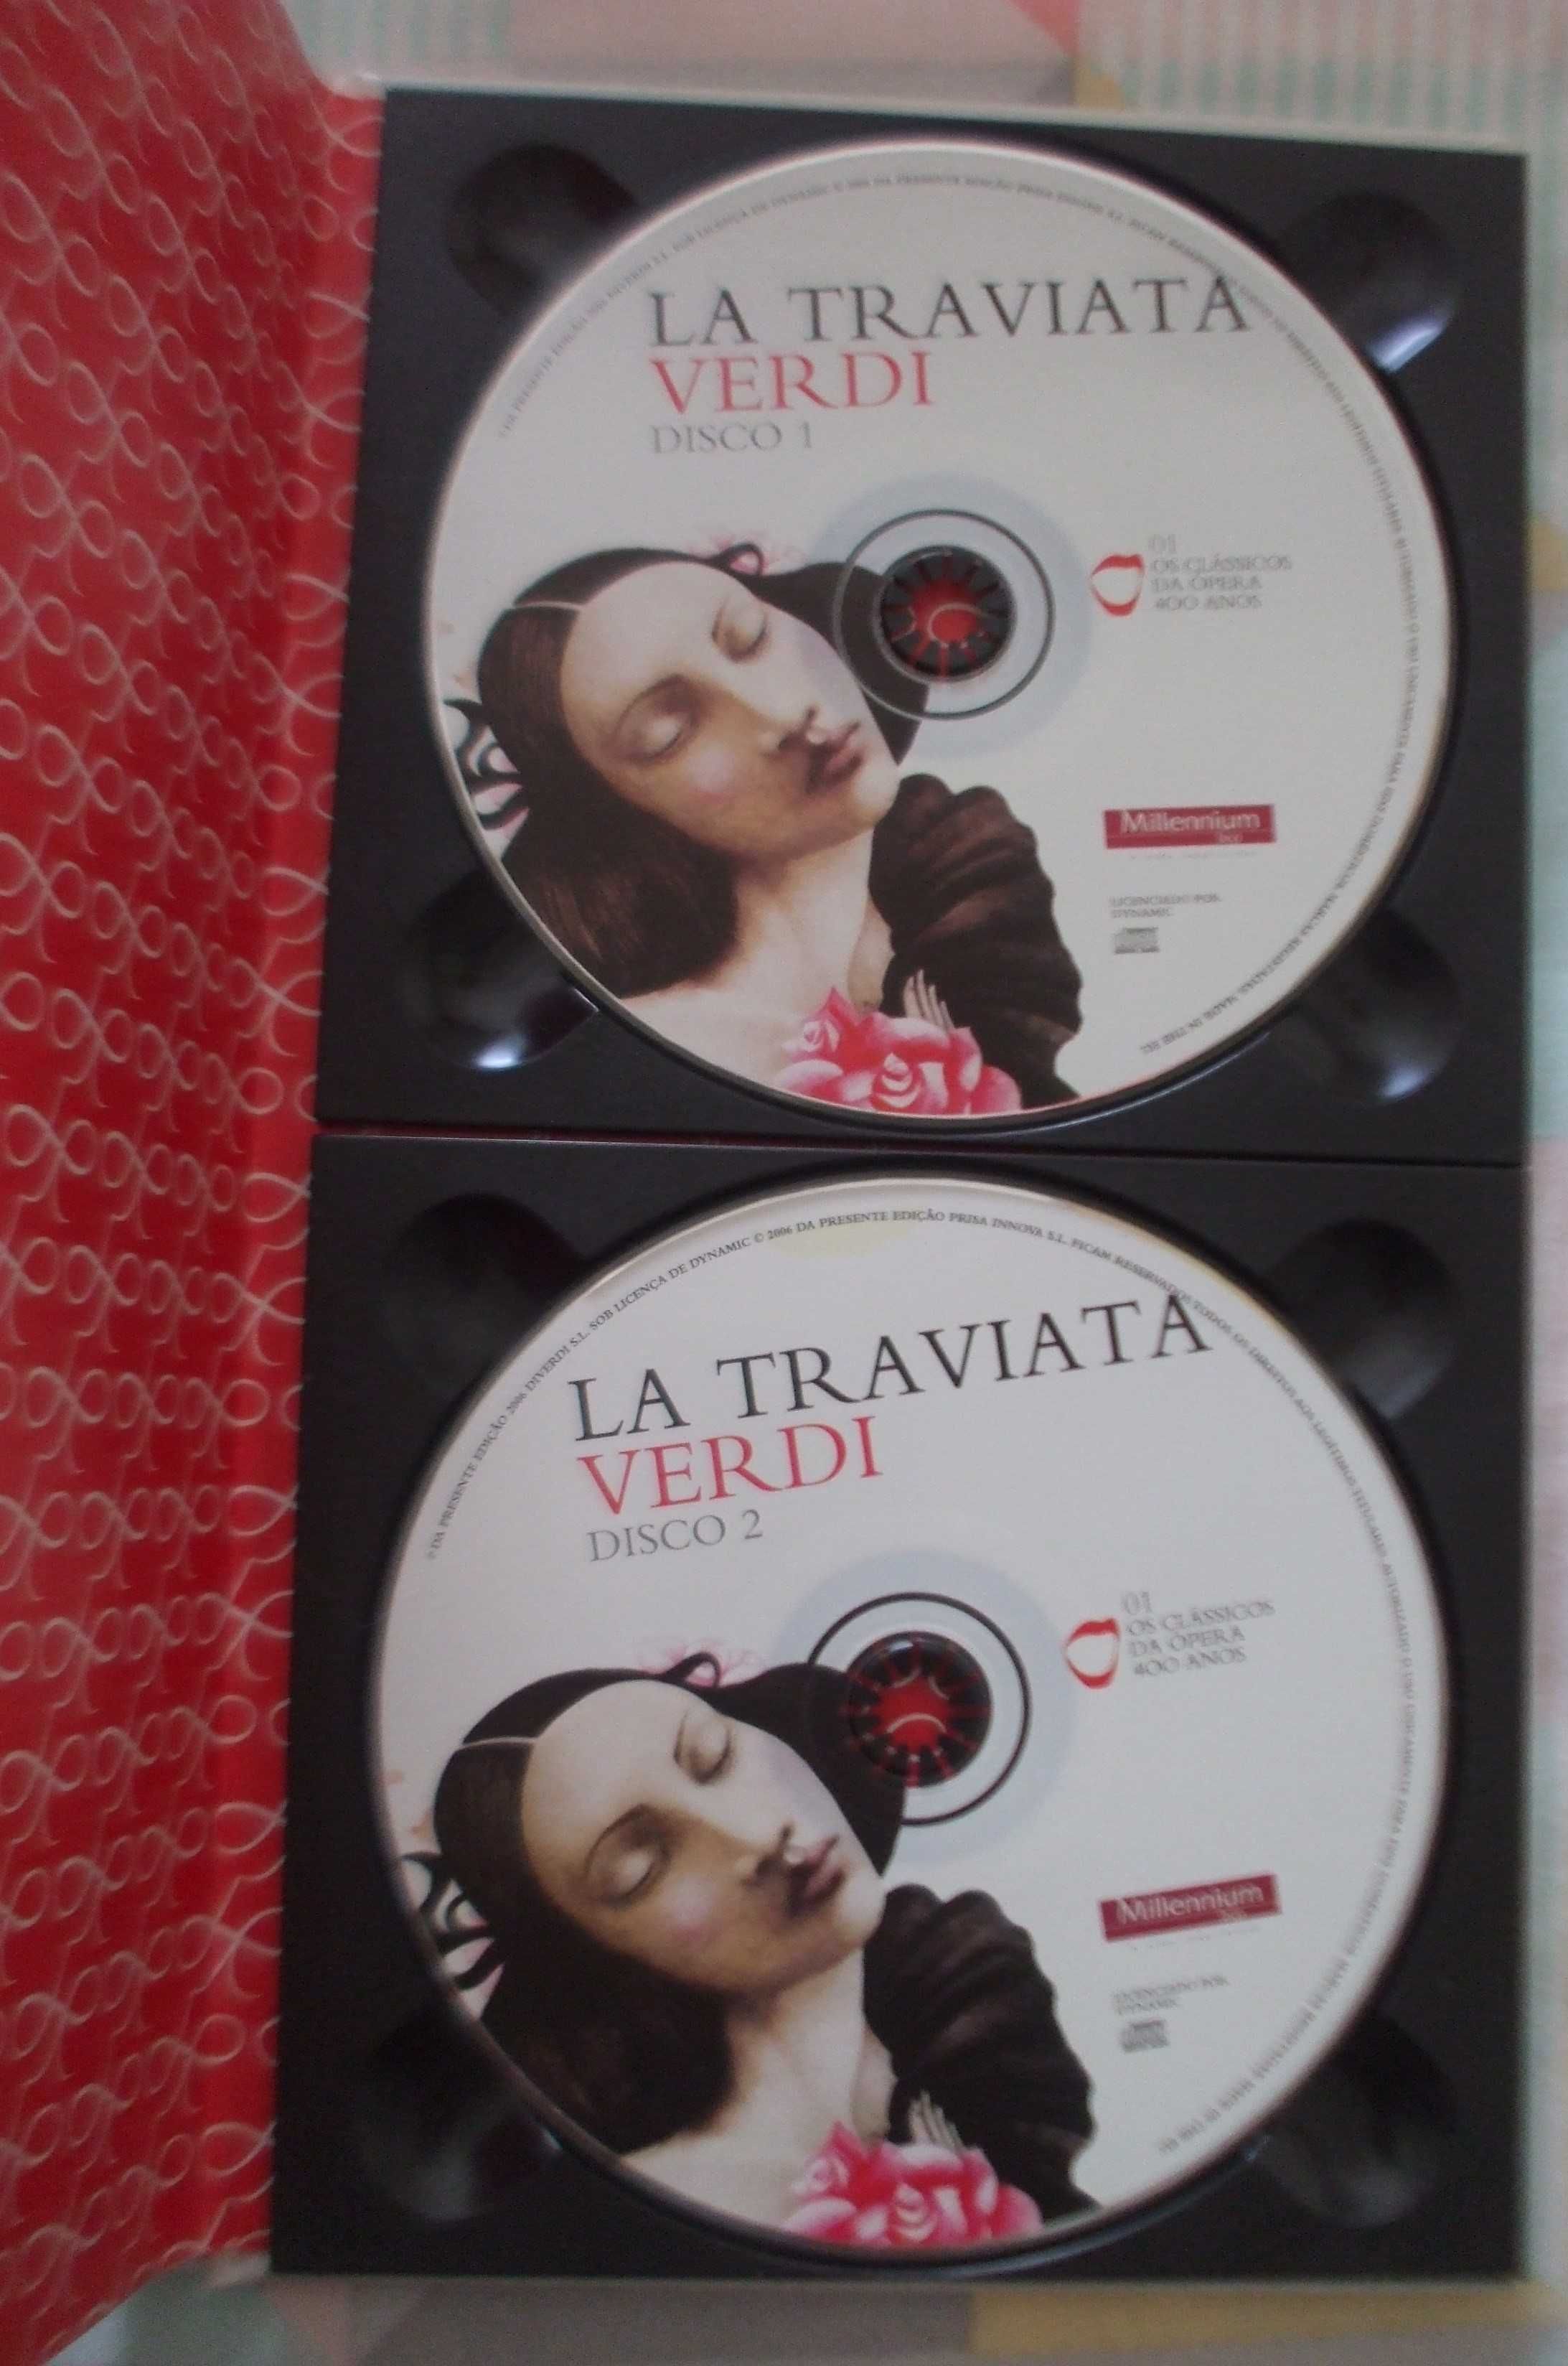 La Traviata, Verdi